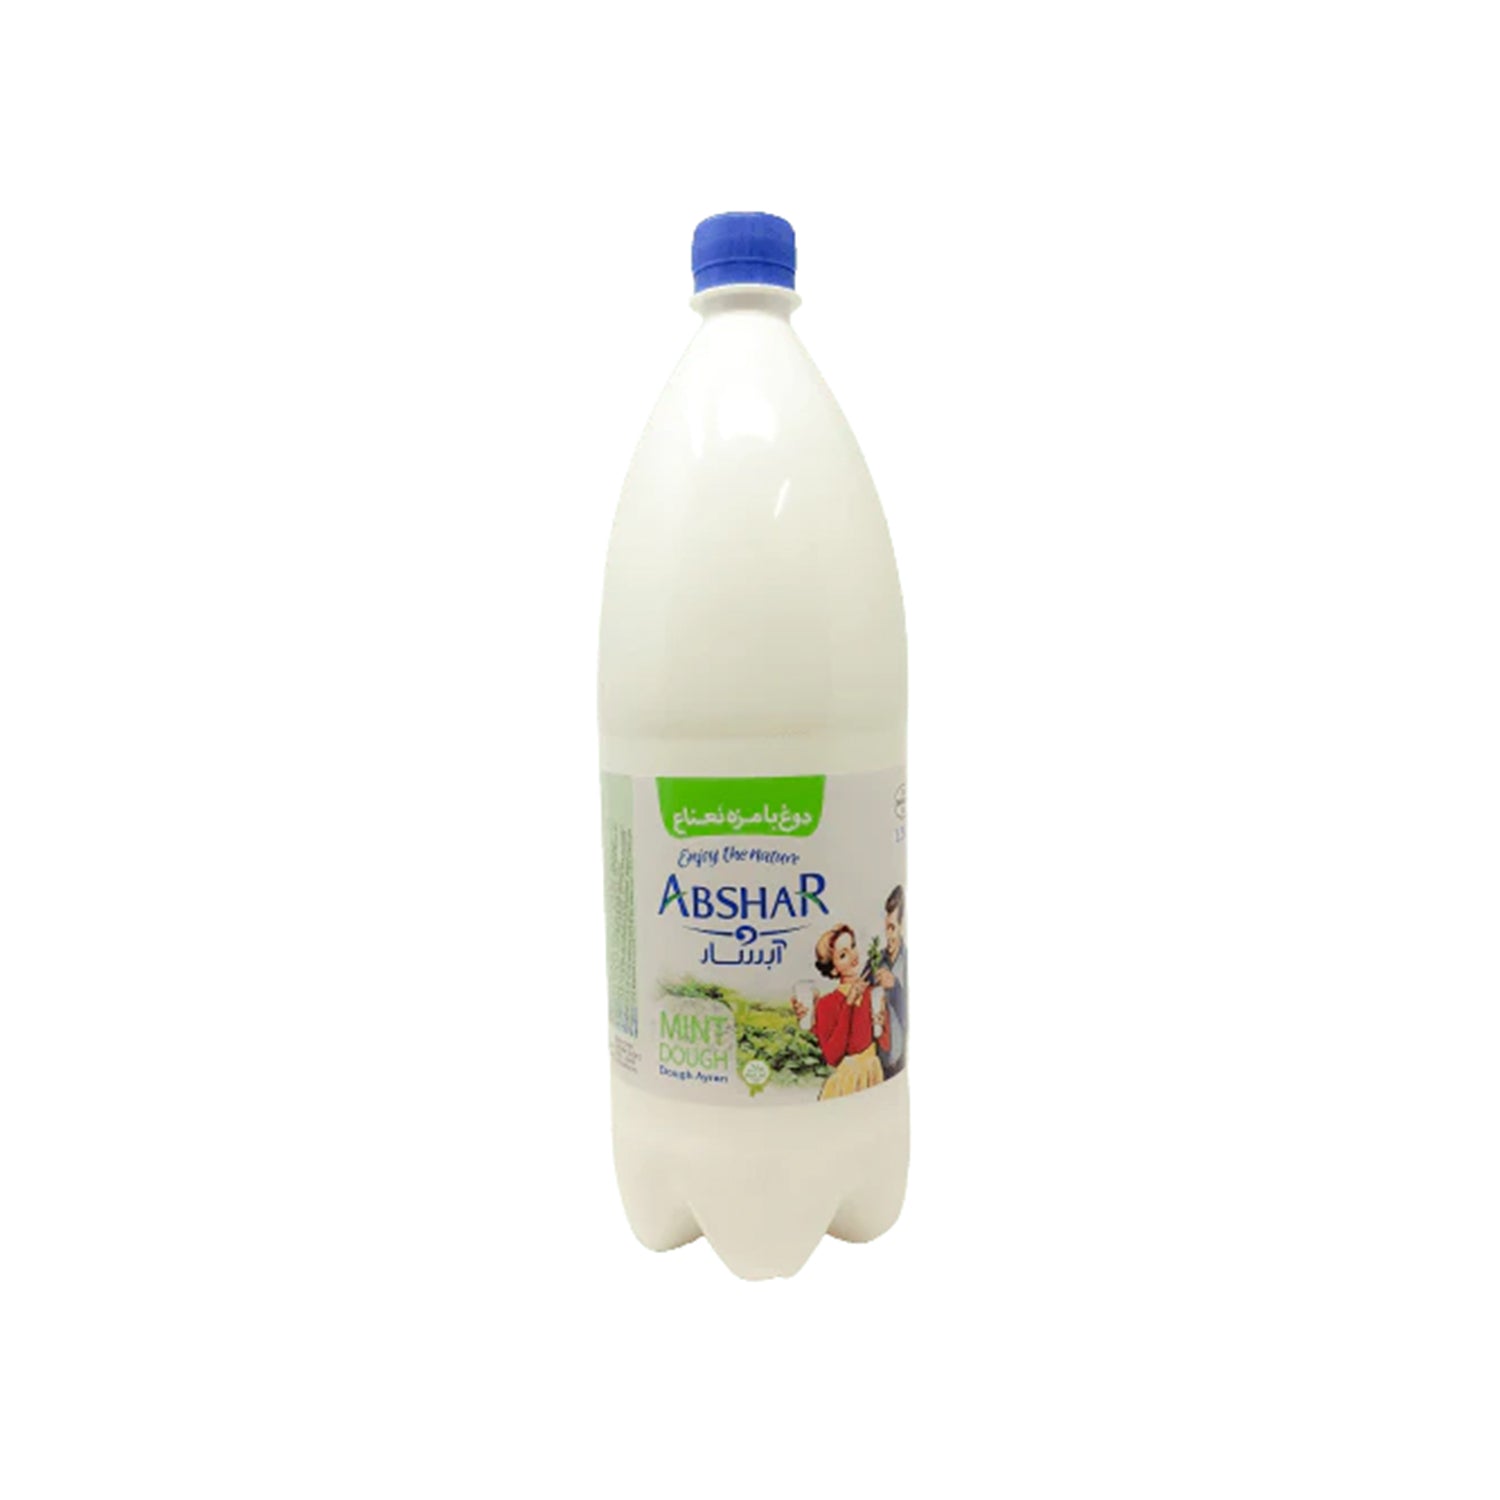 Abshar Mint Yogurt 500ml